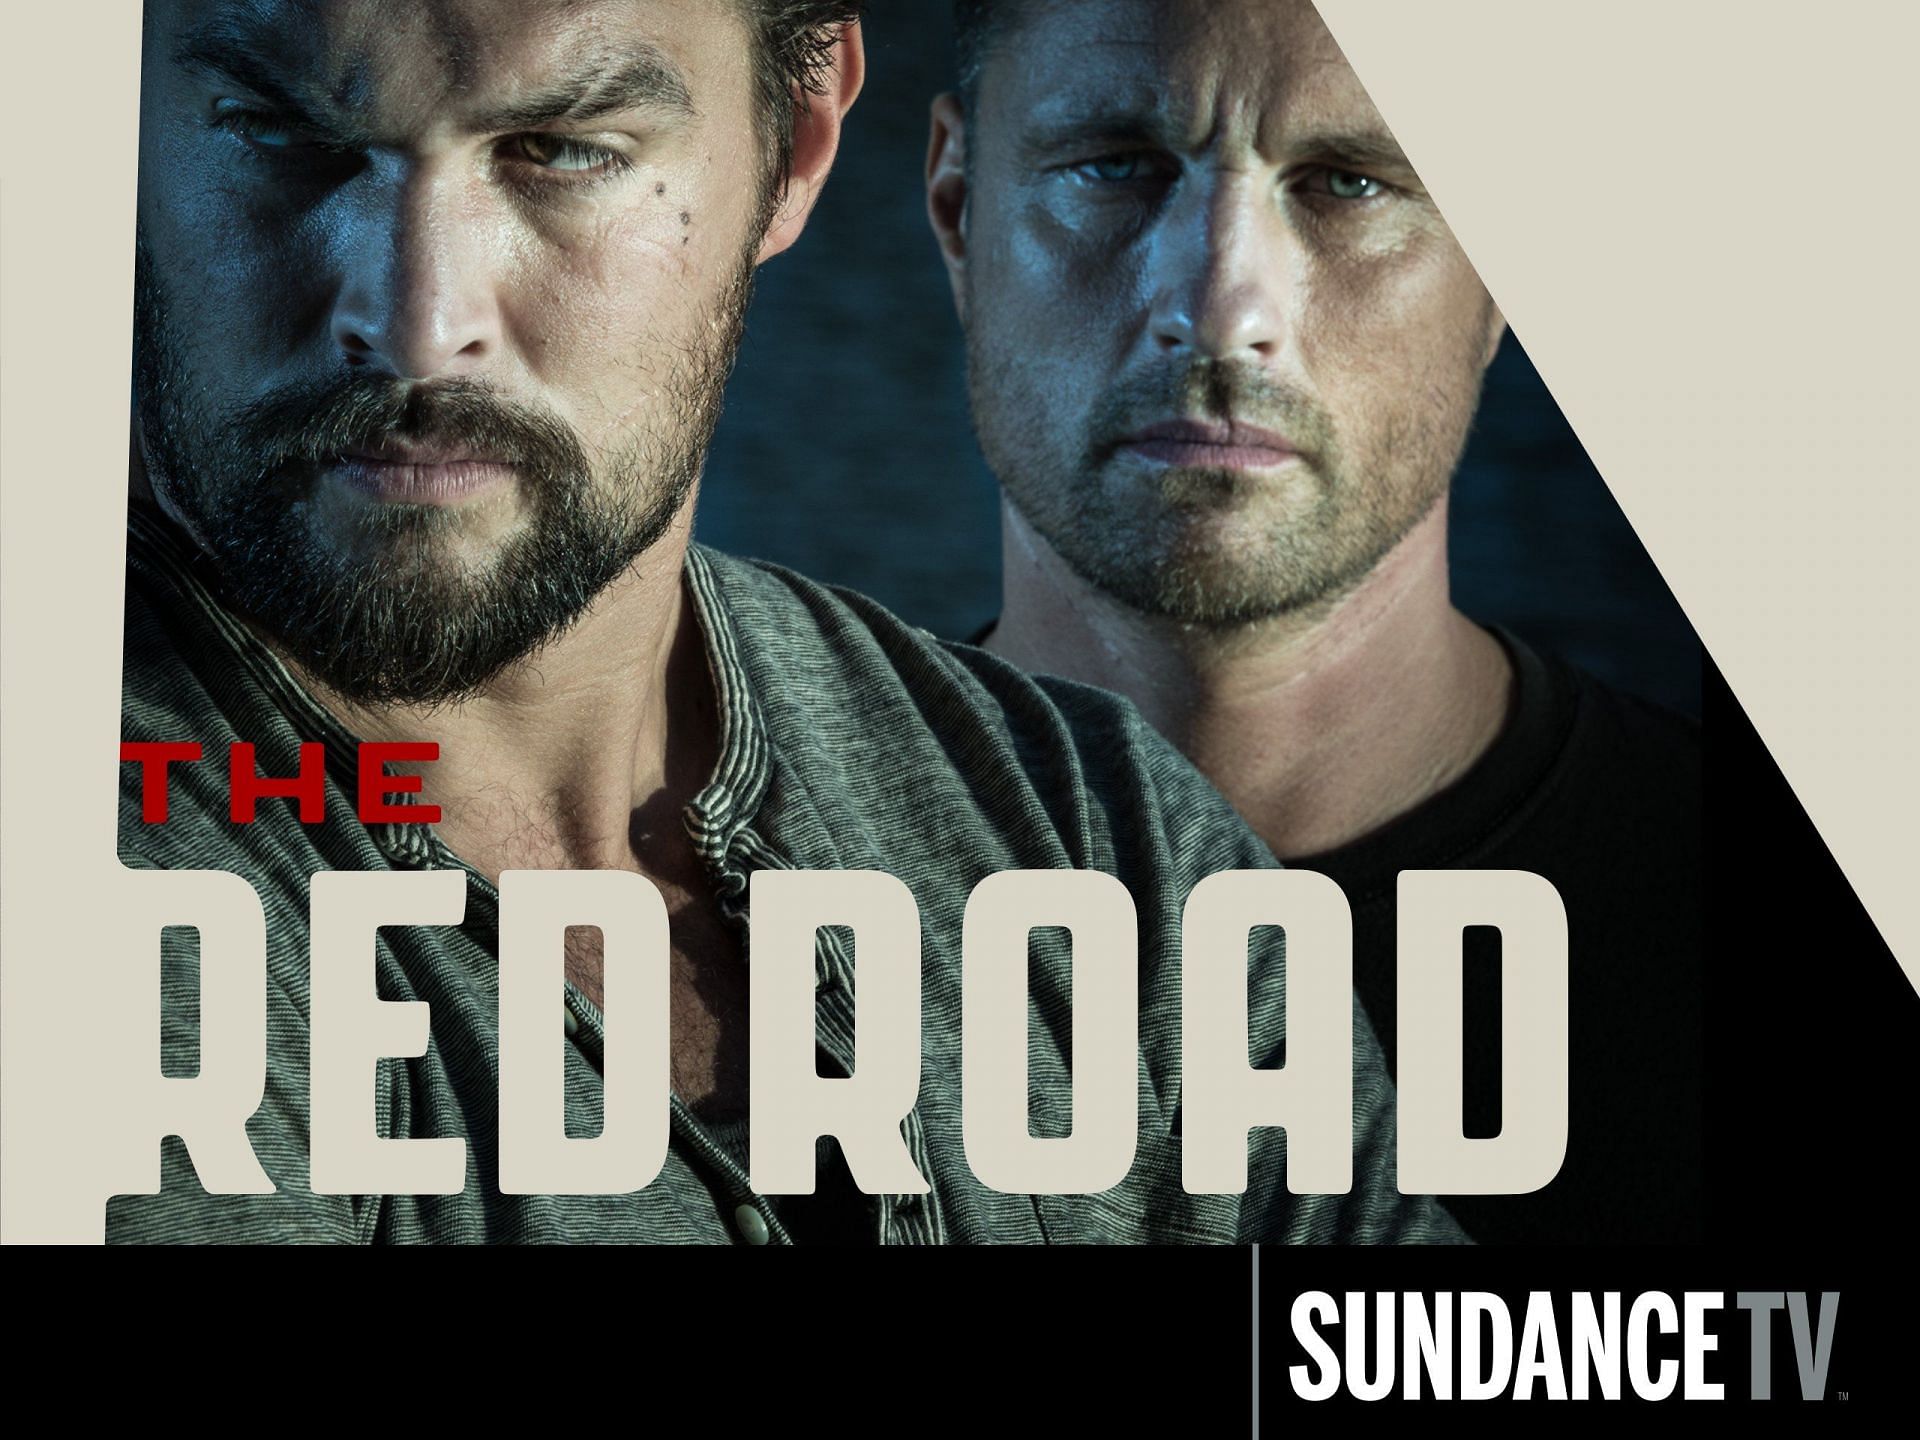 The Red Road (Image via SundanceTV)